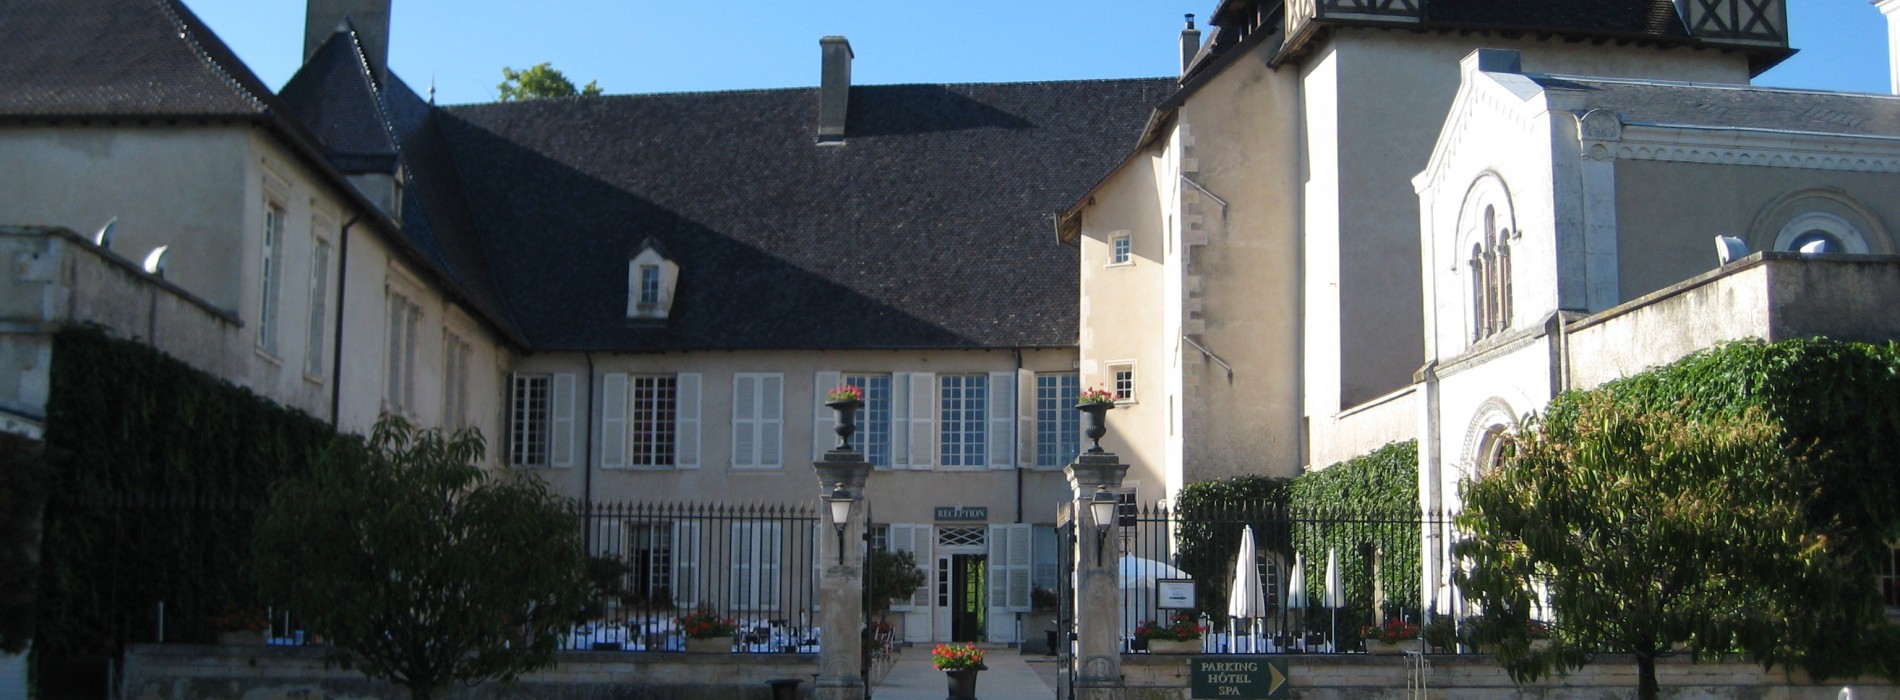 PIzay Chateau